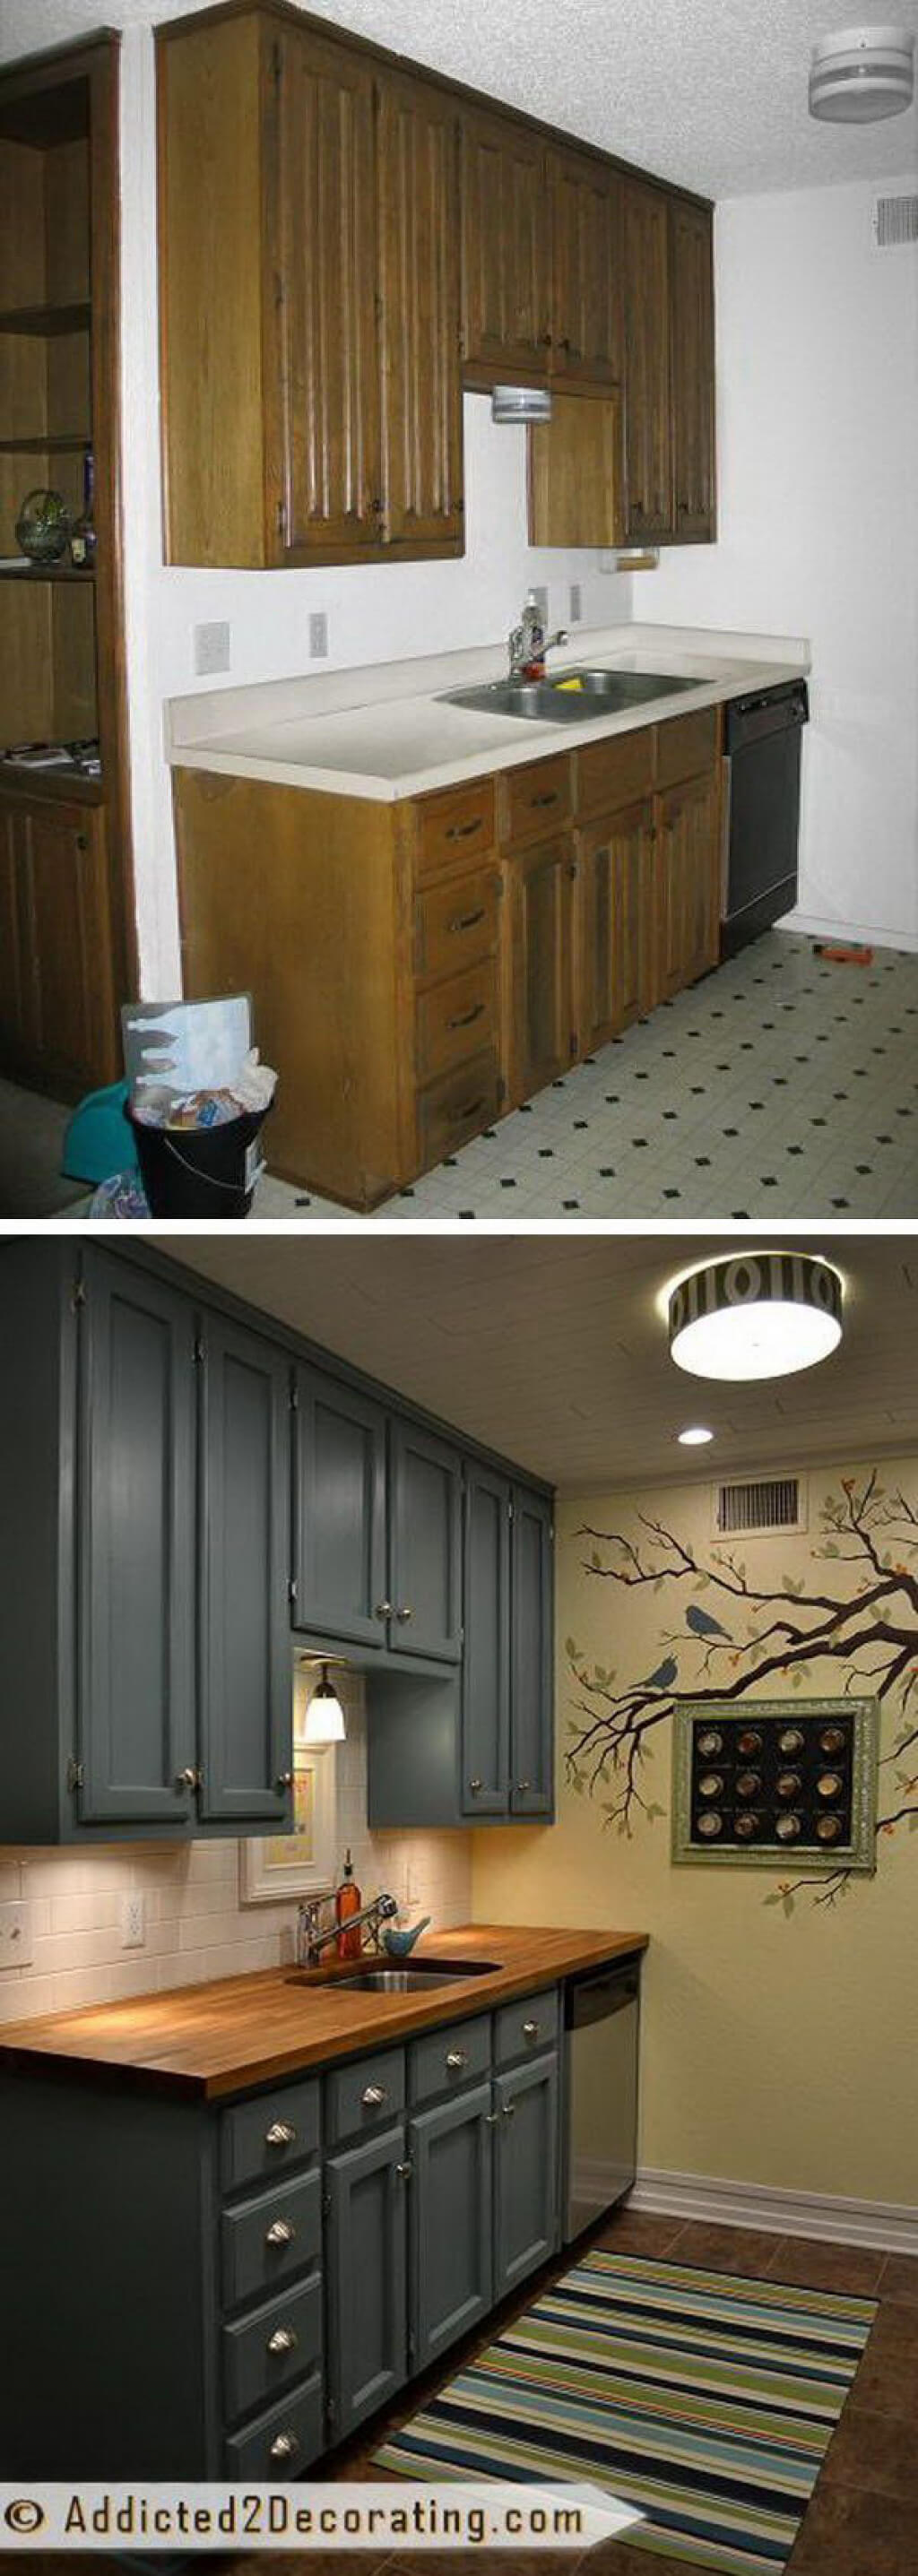 A Dark Vintage Design with Sandy Tiled Floors